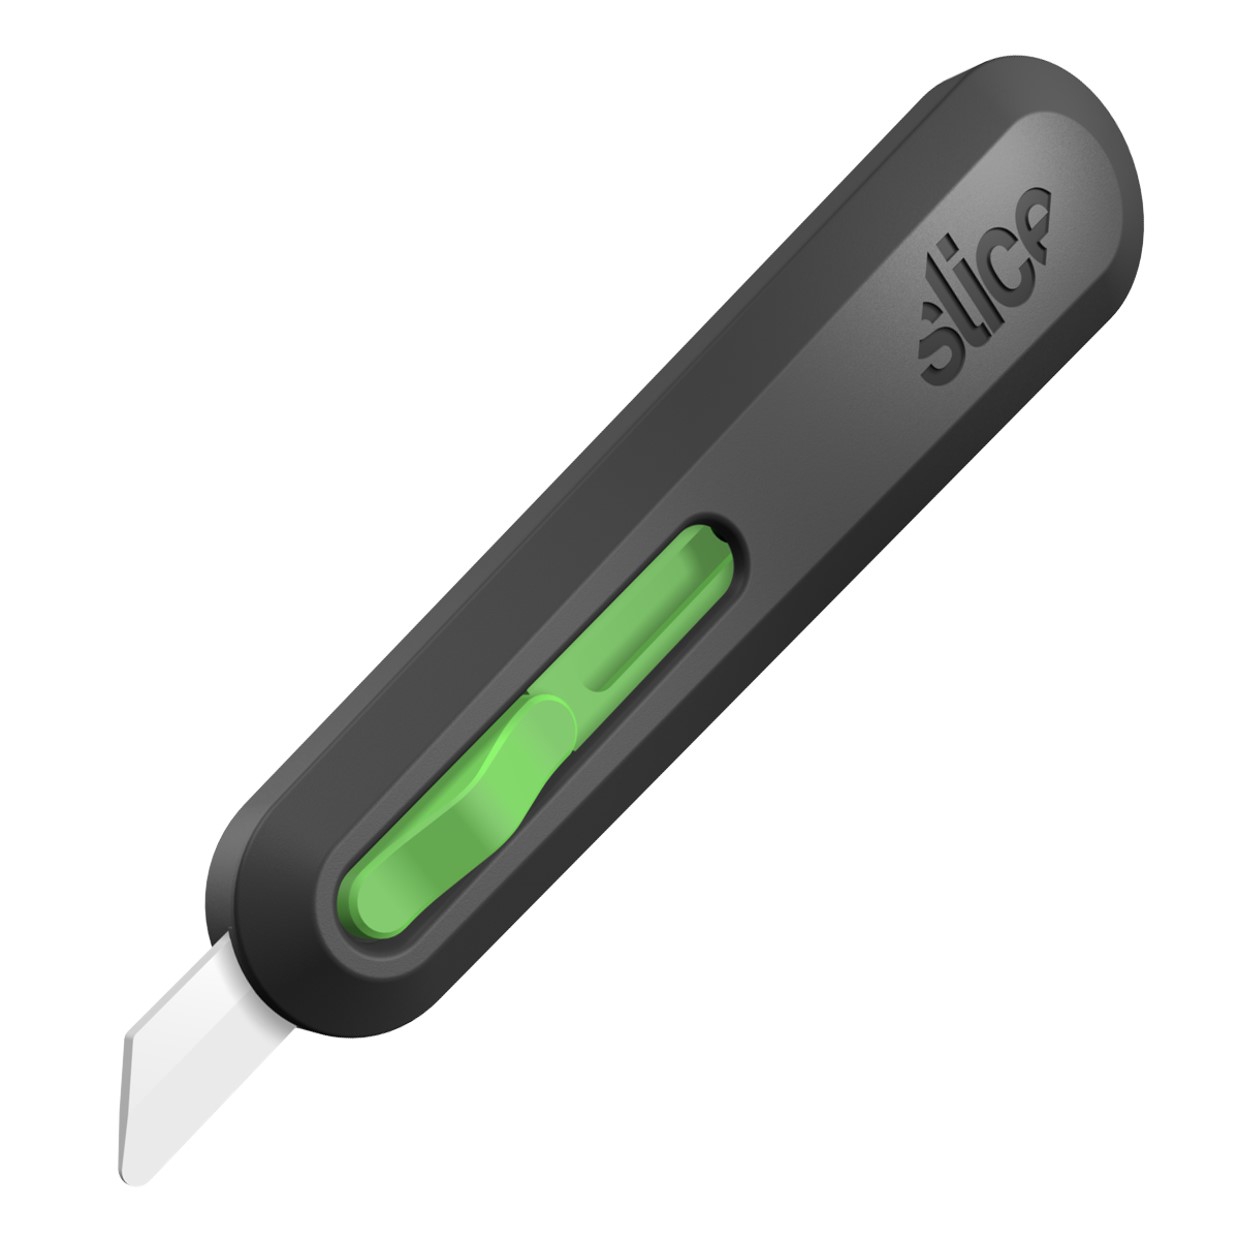 Couteau de sécurité 10554 - Slice utility Slice